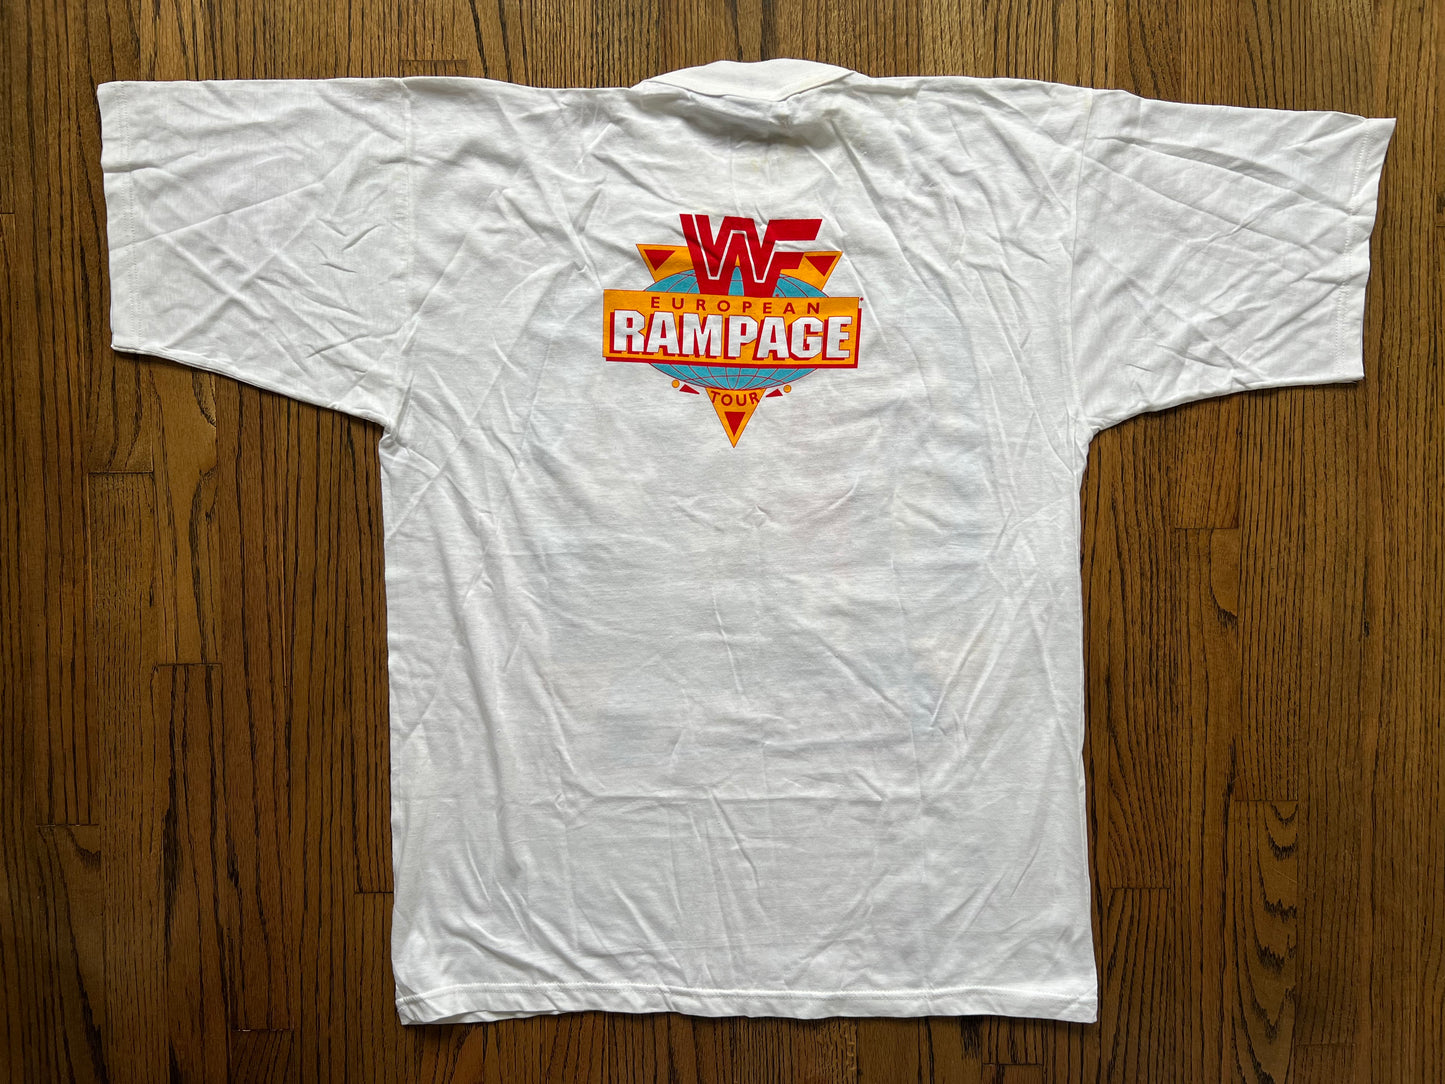 1992 WWF Rampage tour two sided shirt